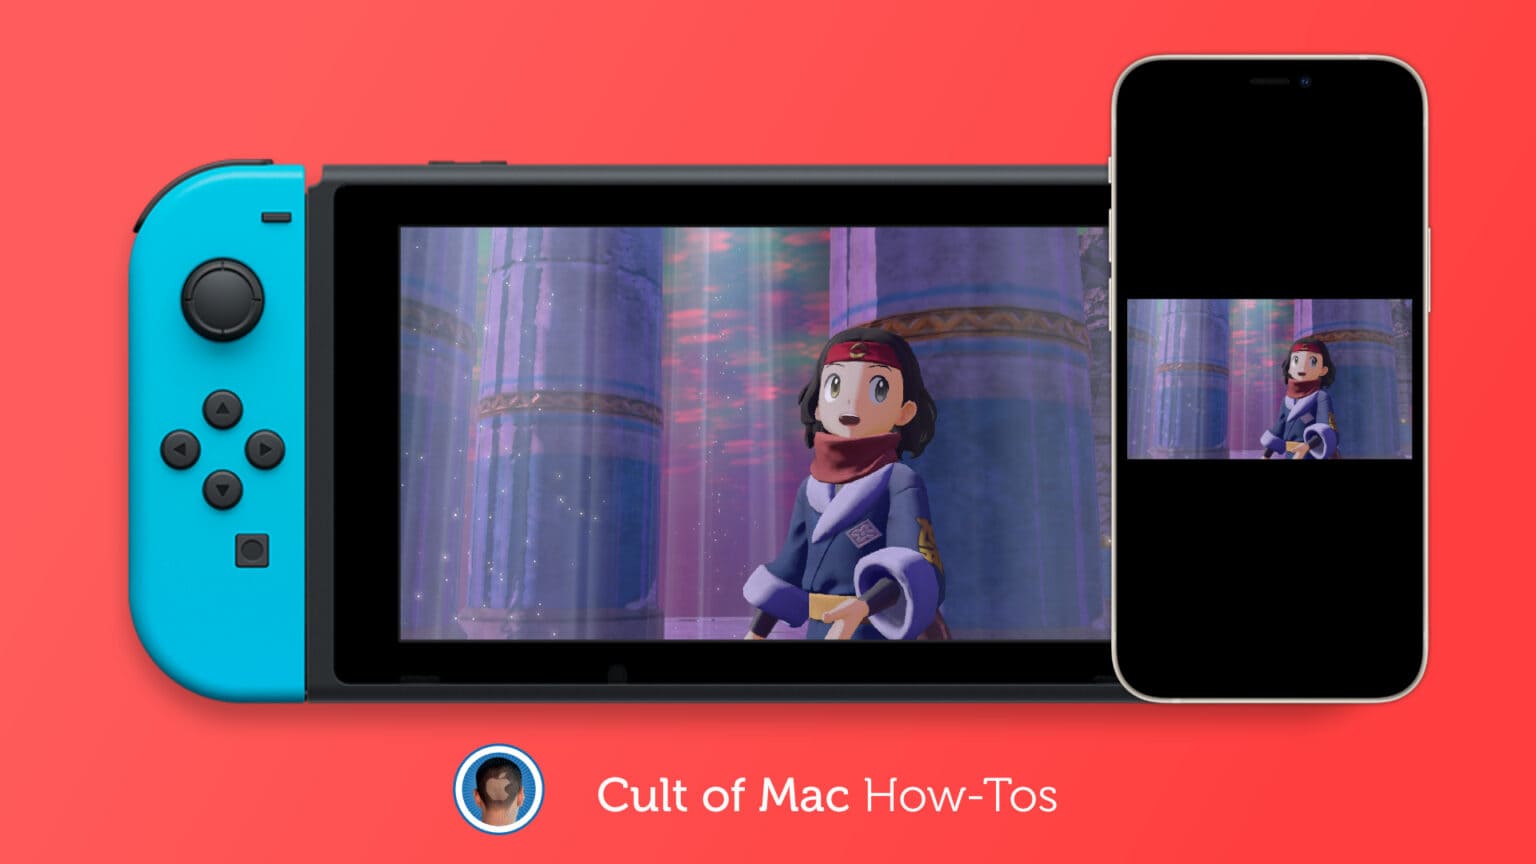 Save Nintendo Switch screenshots to iPhone and iPad